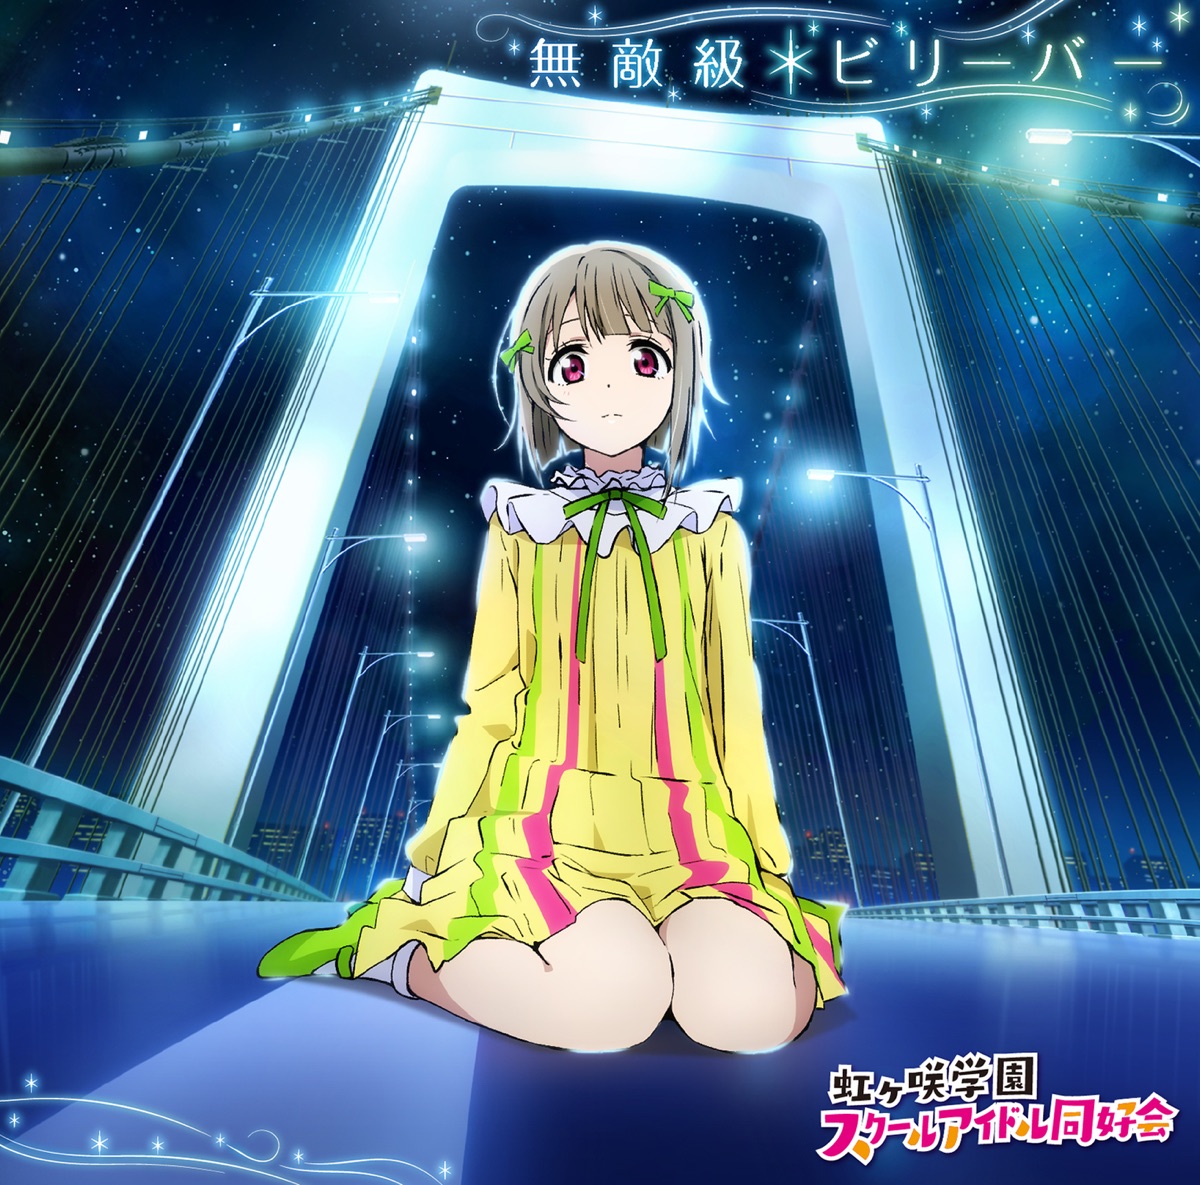 Cover for『Nijigasaki High School Idol Club - Mirai Harmony』from the release『Muteki Kyuu*Believer』